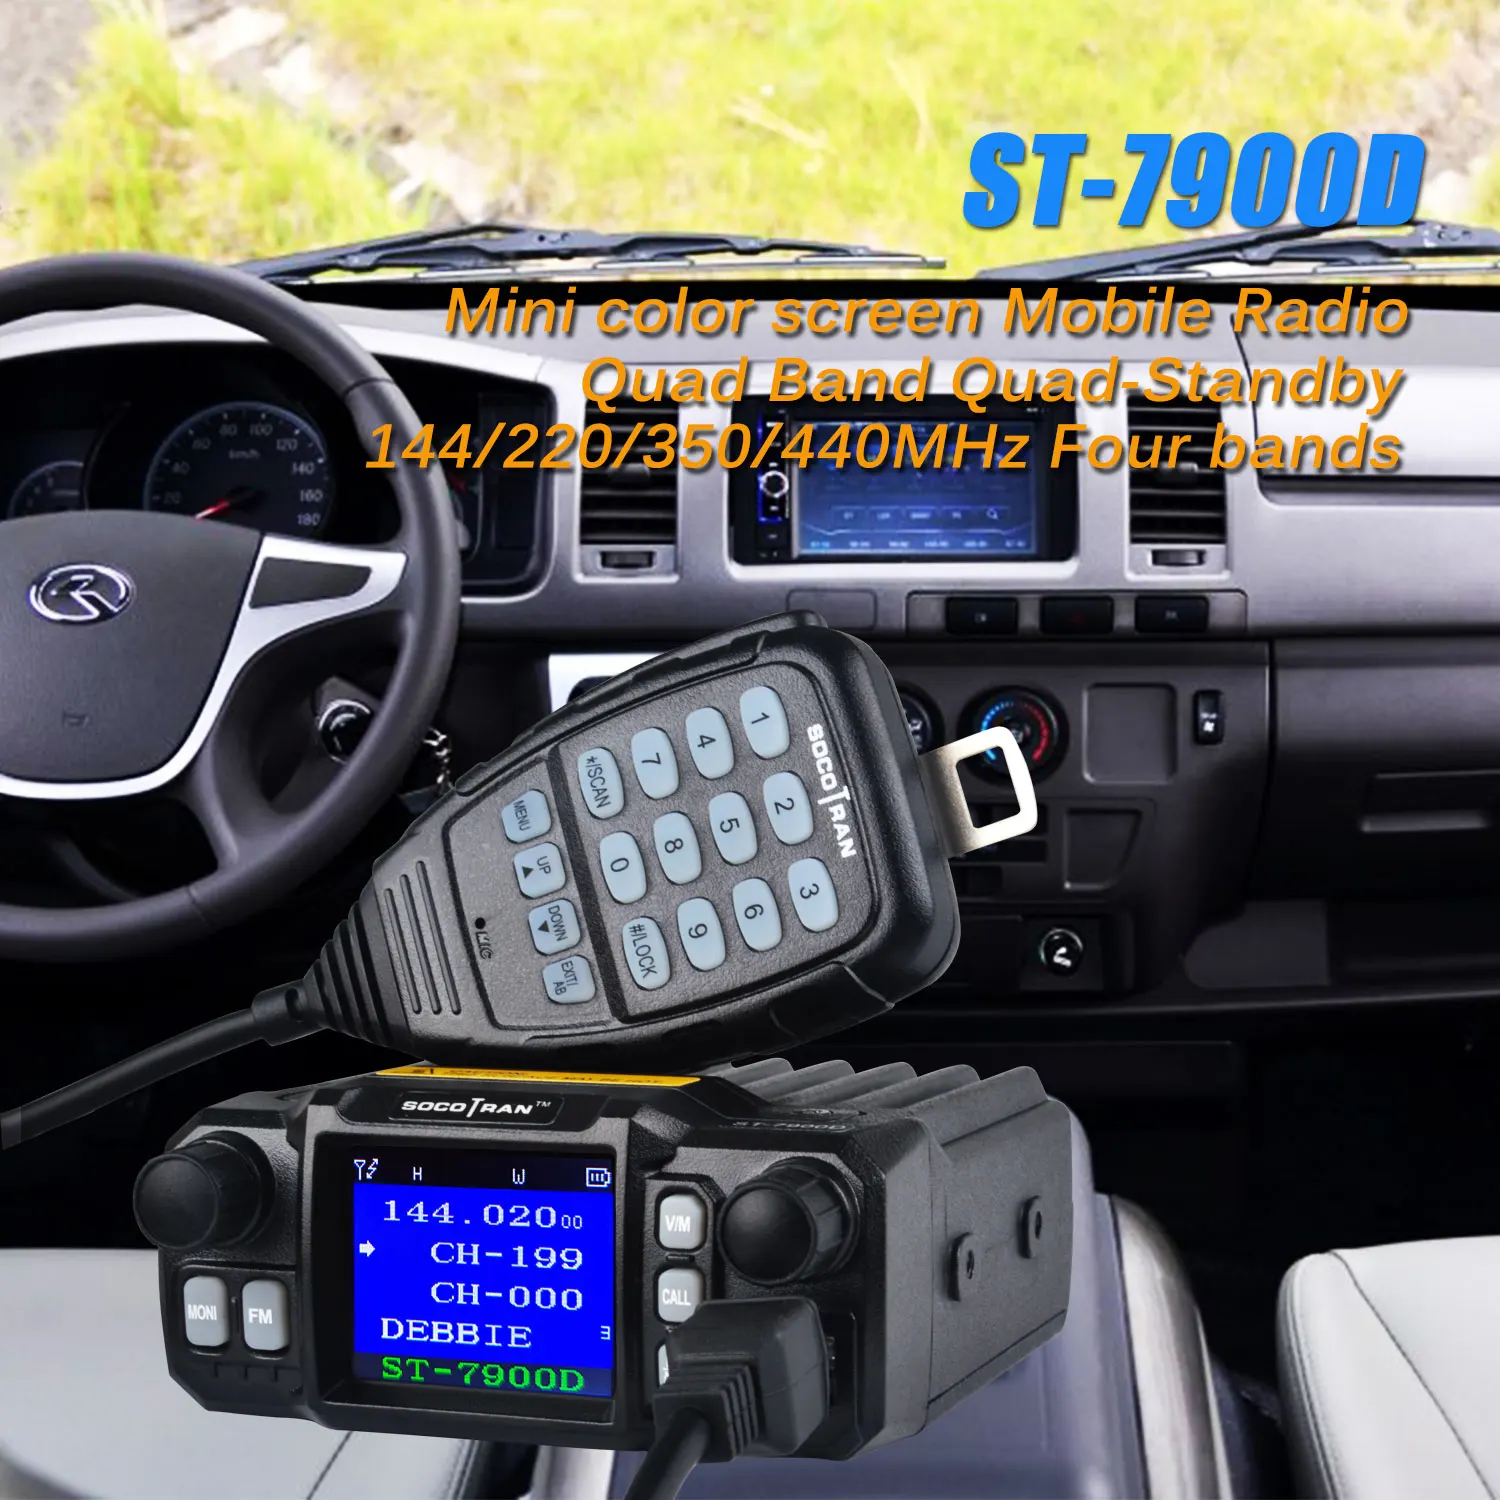 ST-7900D Car Mobile Walkie Talkie  Amateur Ham Radio Vehicle Transceiver 136/220/350/440MHZ 4 Bands UHF VHF Mobile car radios